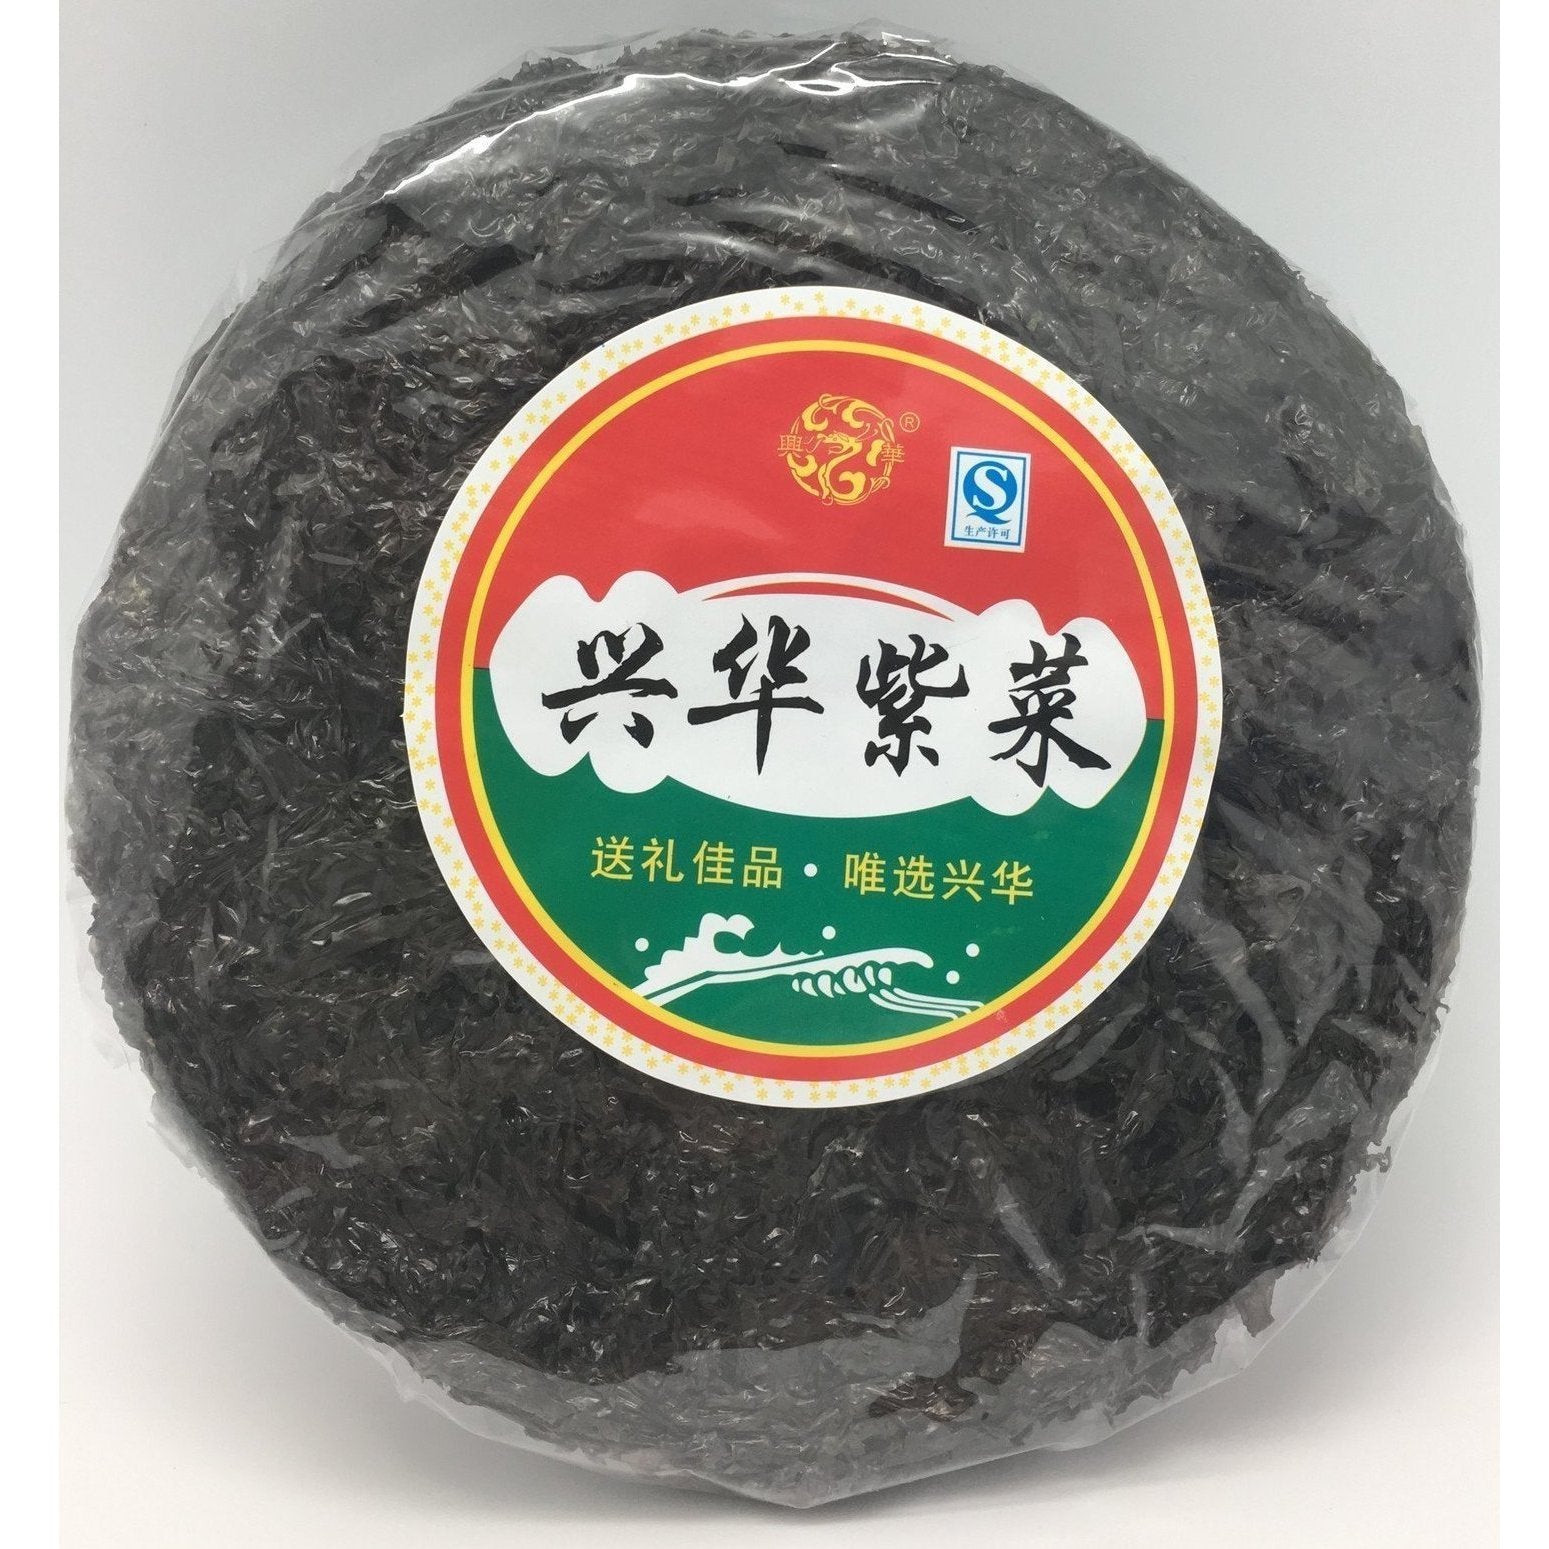 D121L Hung Wa Brand - Dried Seaweed 80g - 40 bags / 1 CTN - New Eastland Pty Ltd - Asian food wholesalers